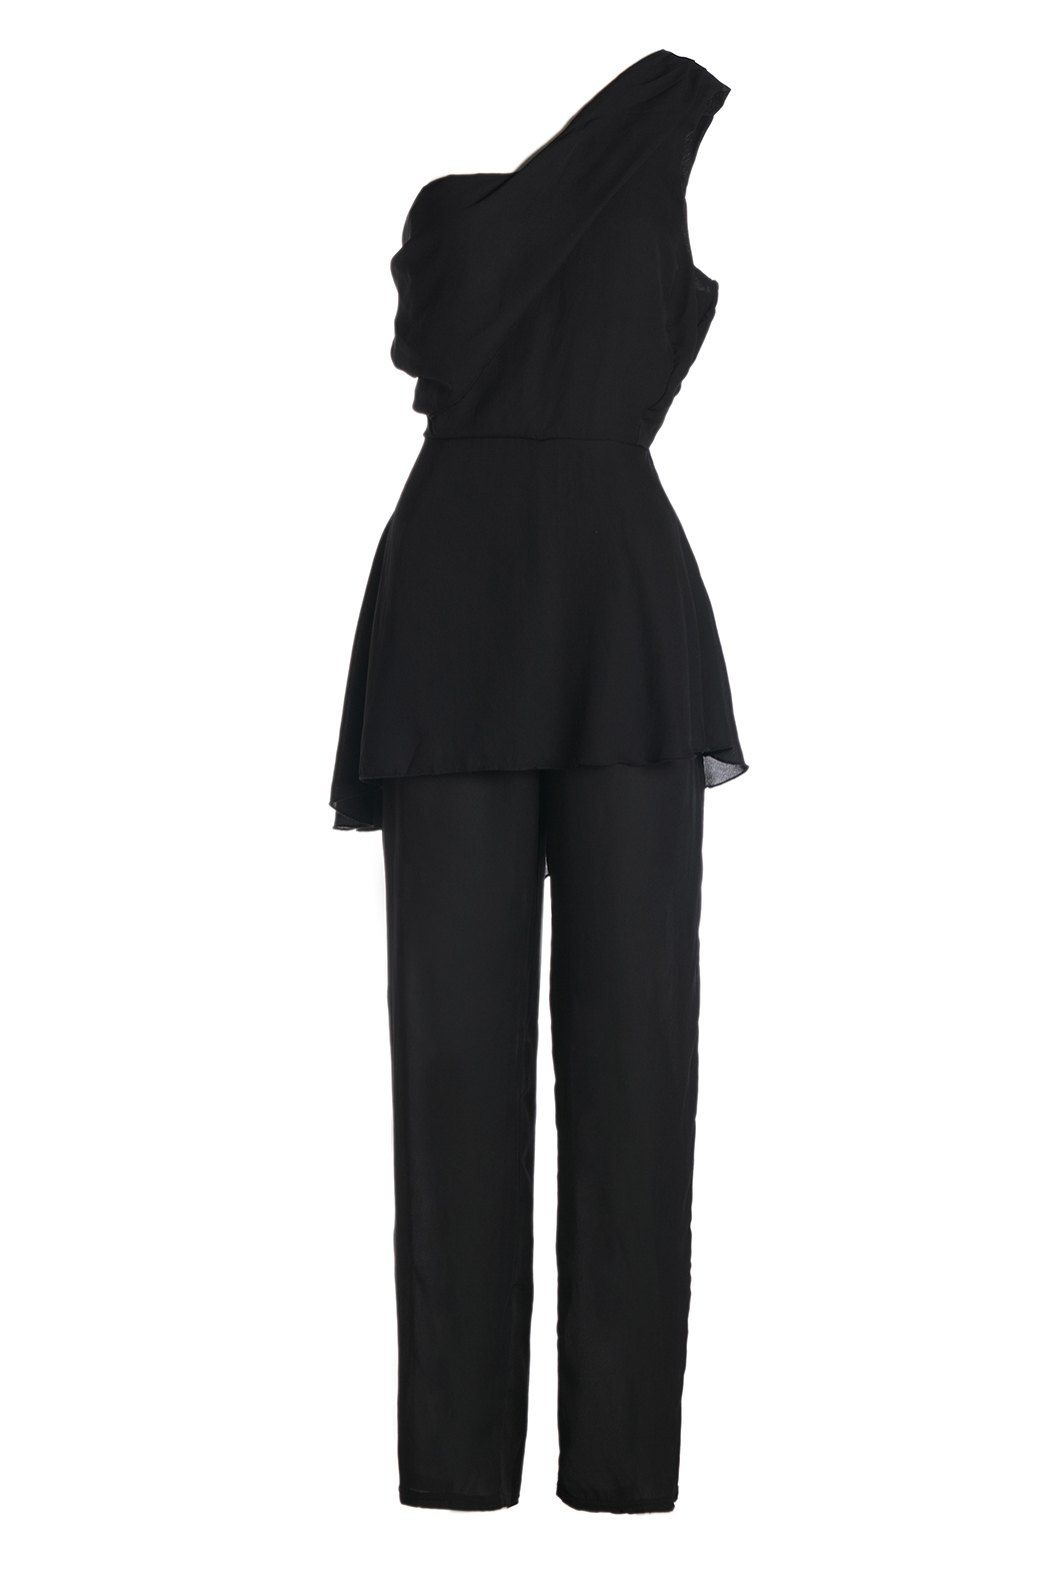 Black 2xl One Shoulder Sleeveless Dressy Jumpsuit | Rosegal.com